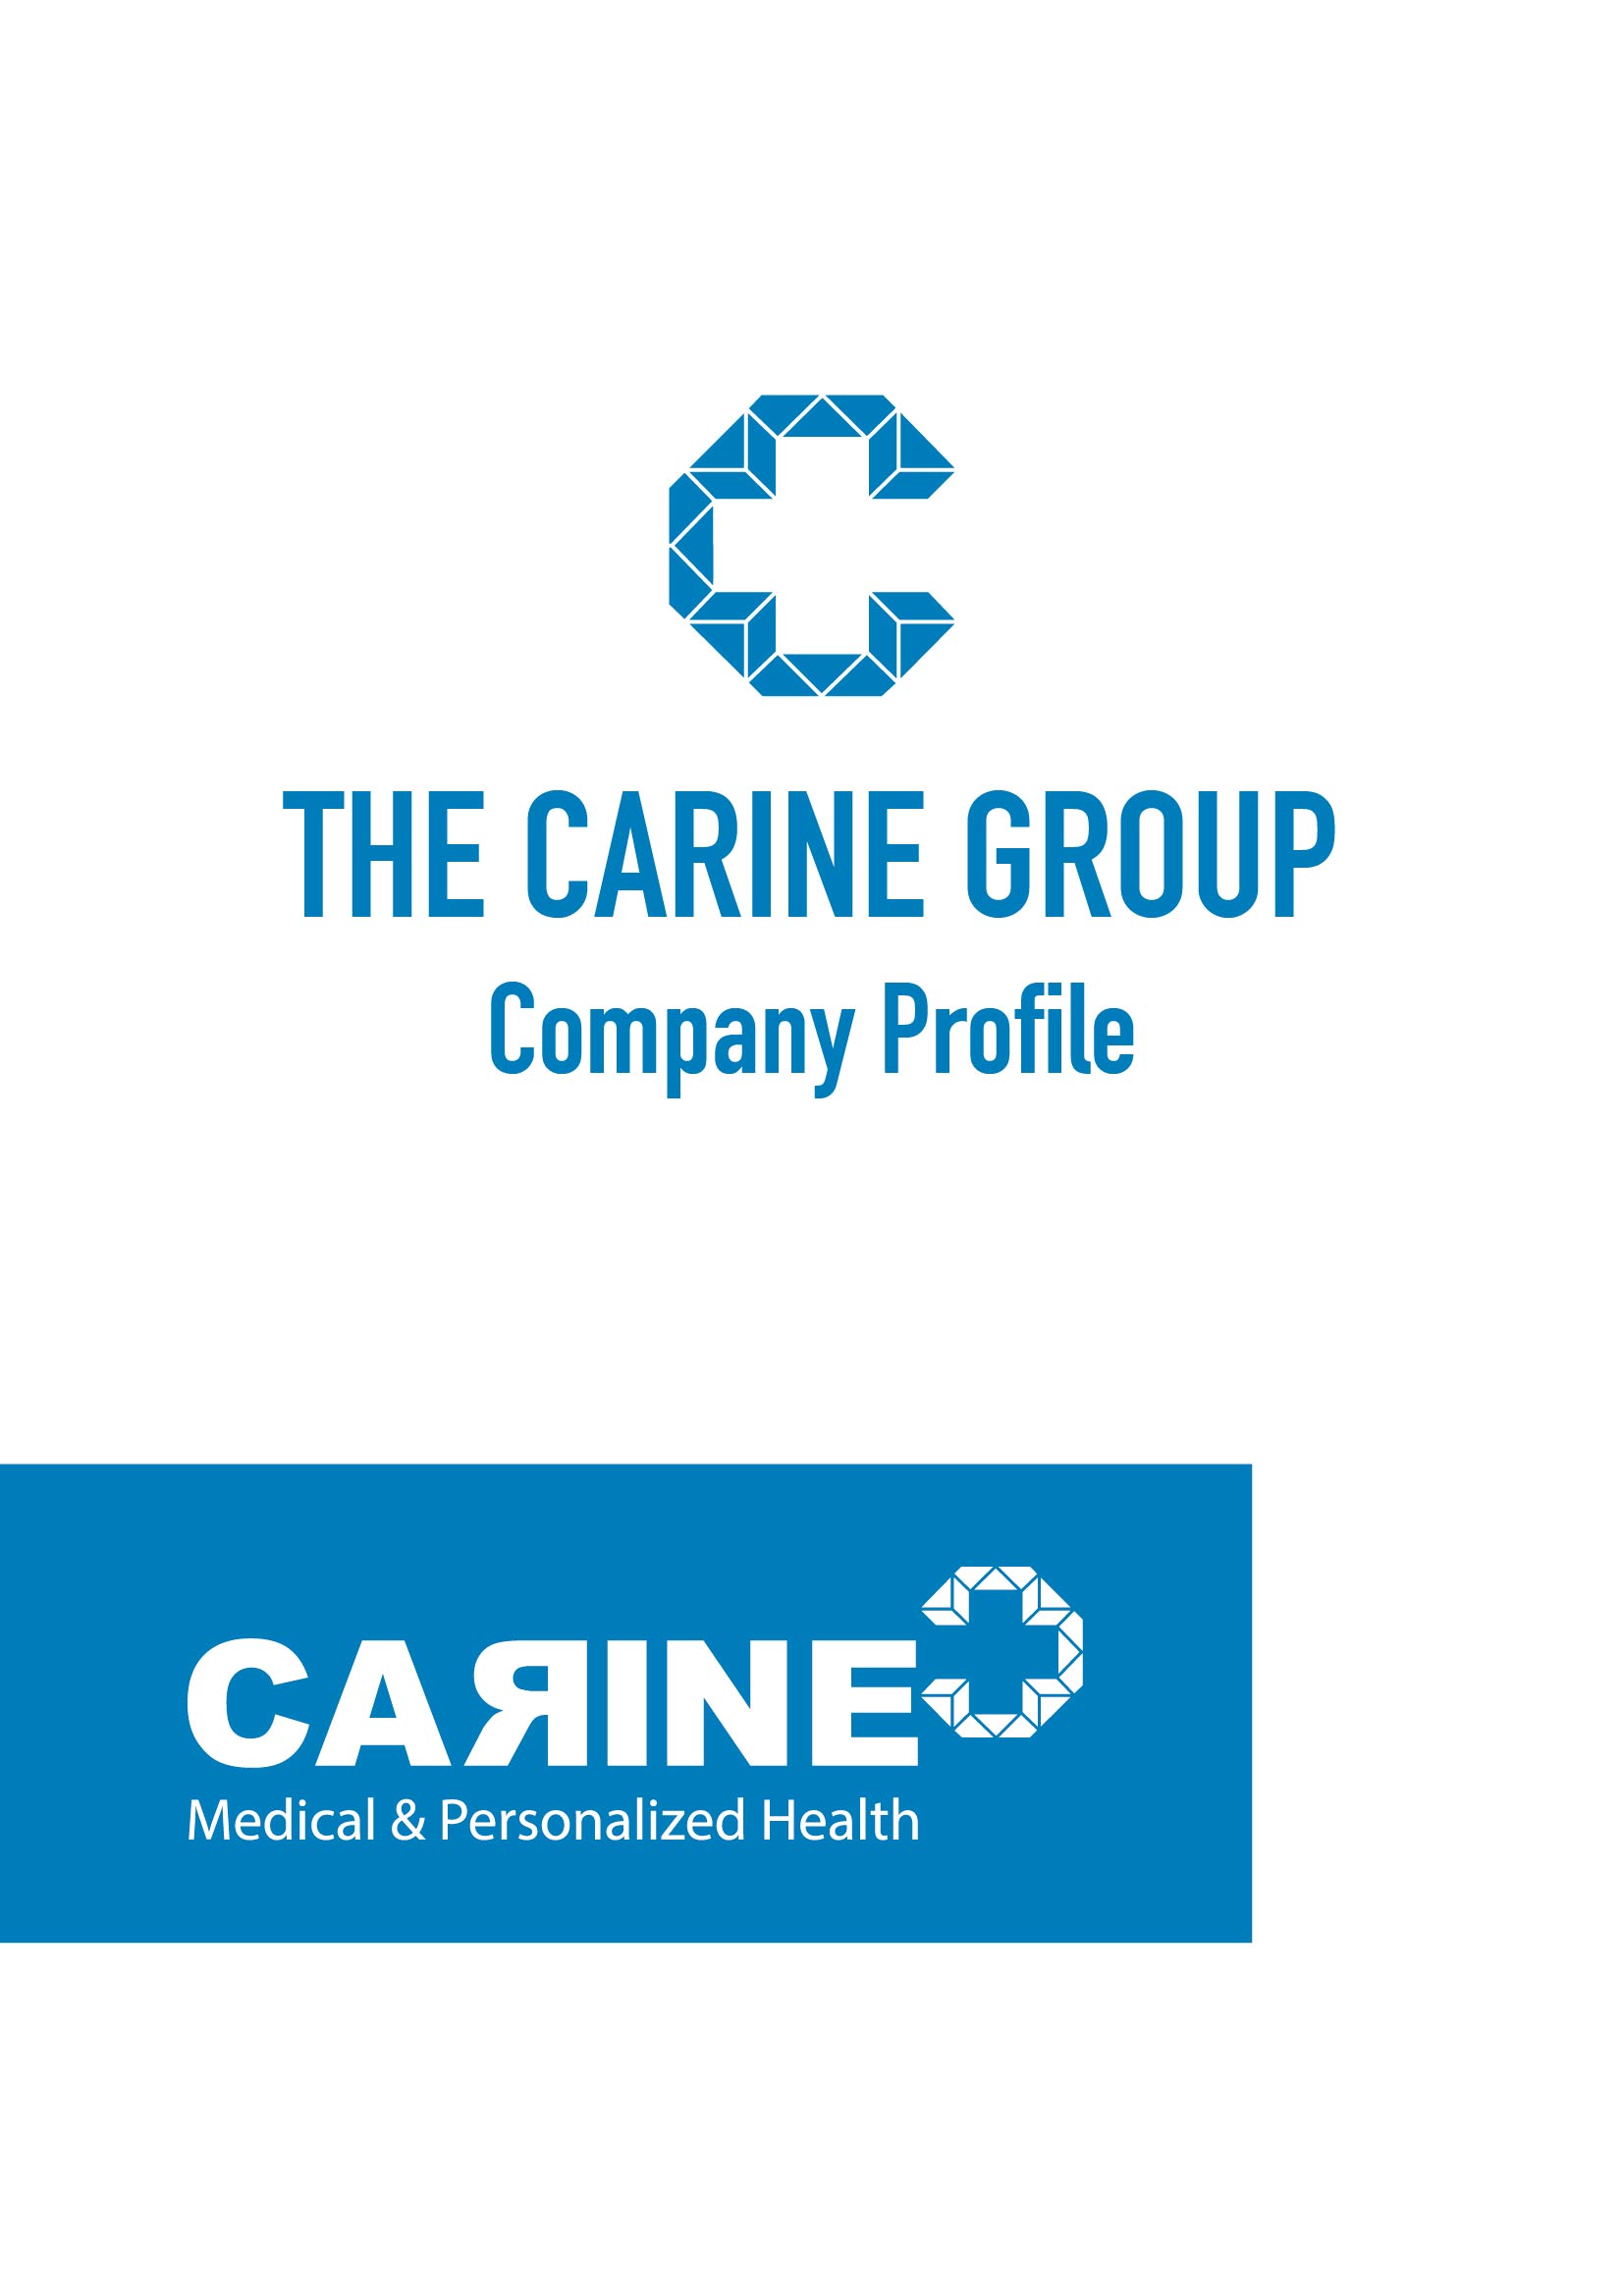 1. THE CARINE GROUP COMPANY PROFILE